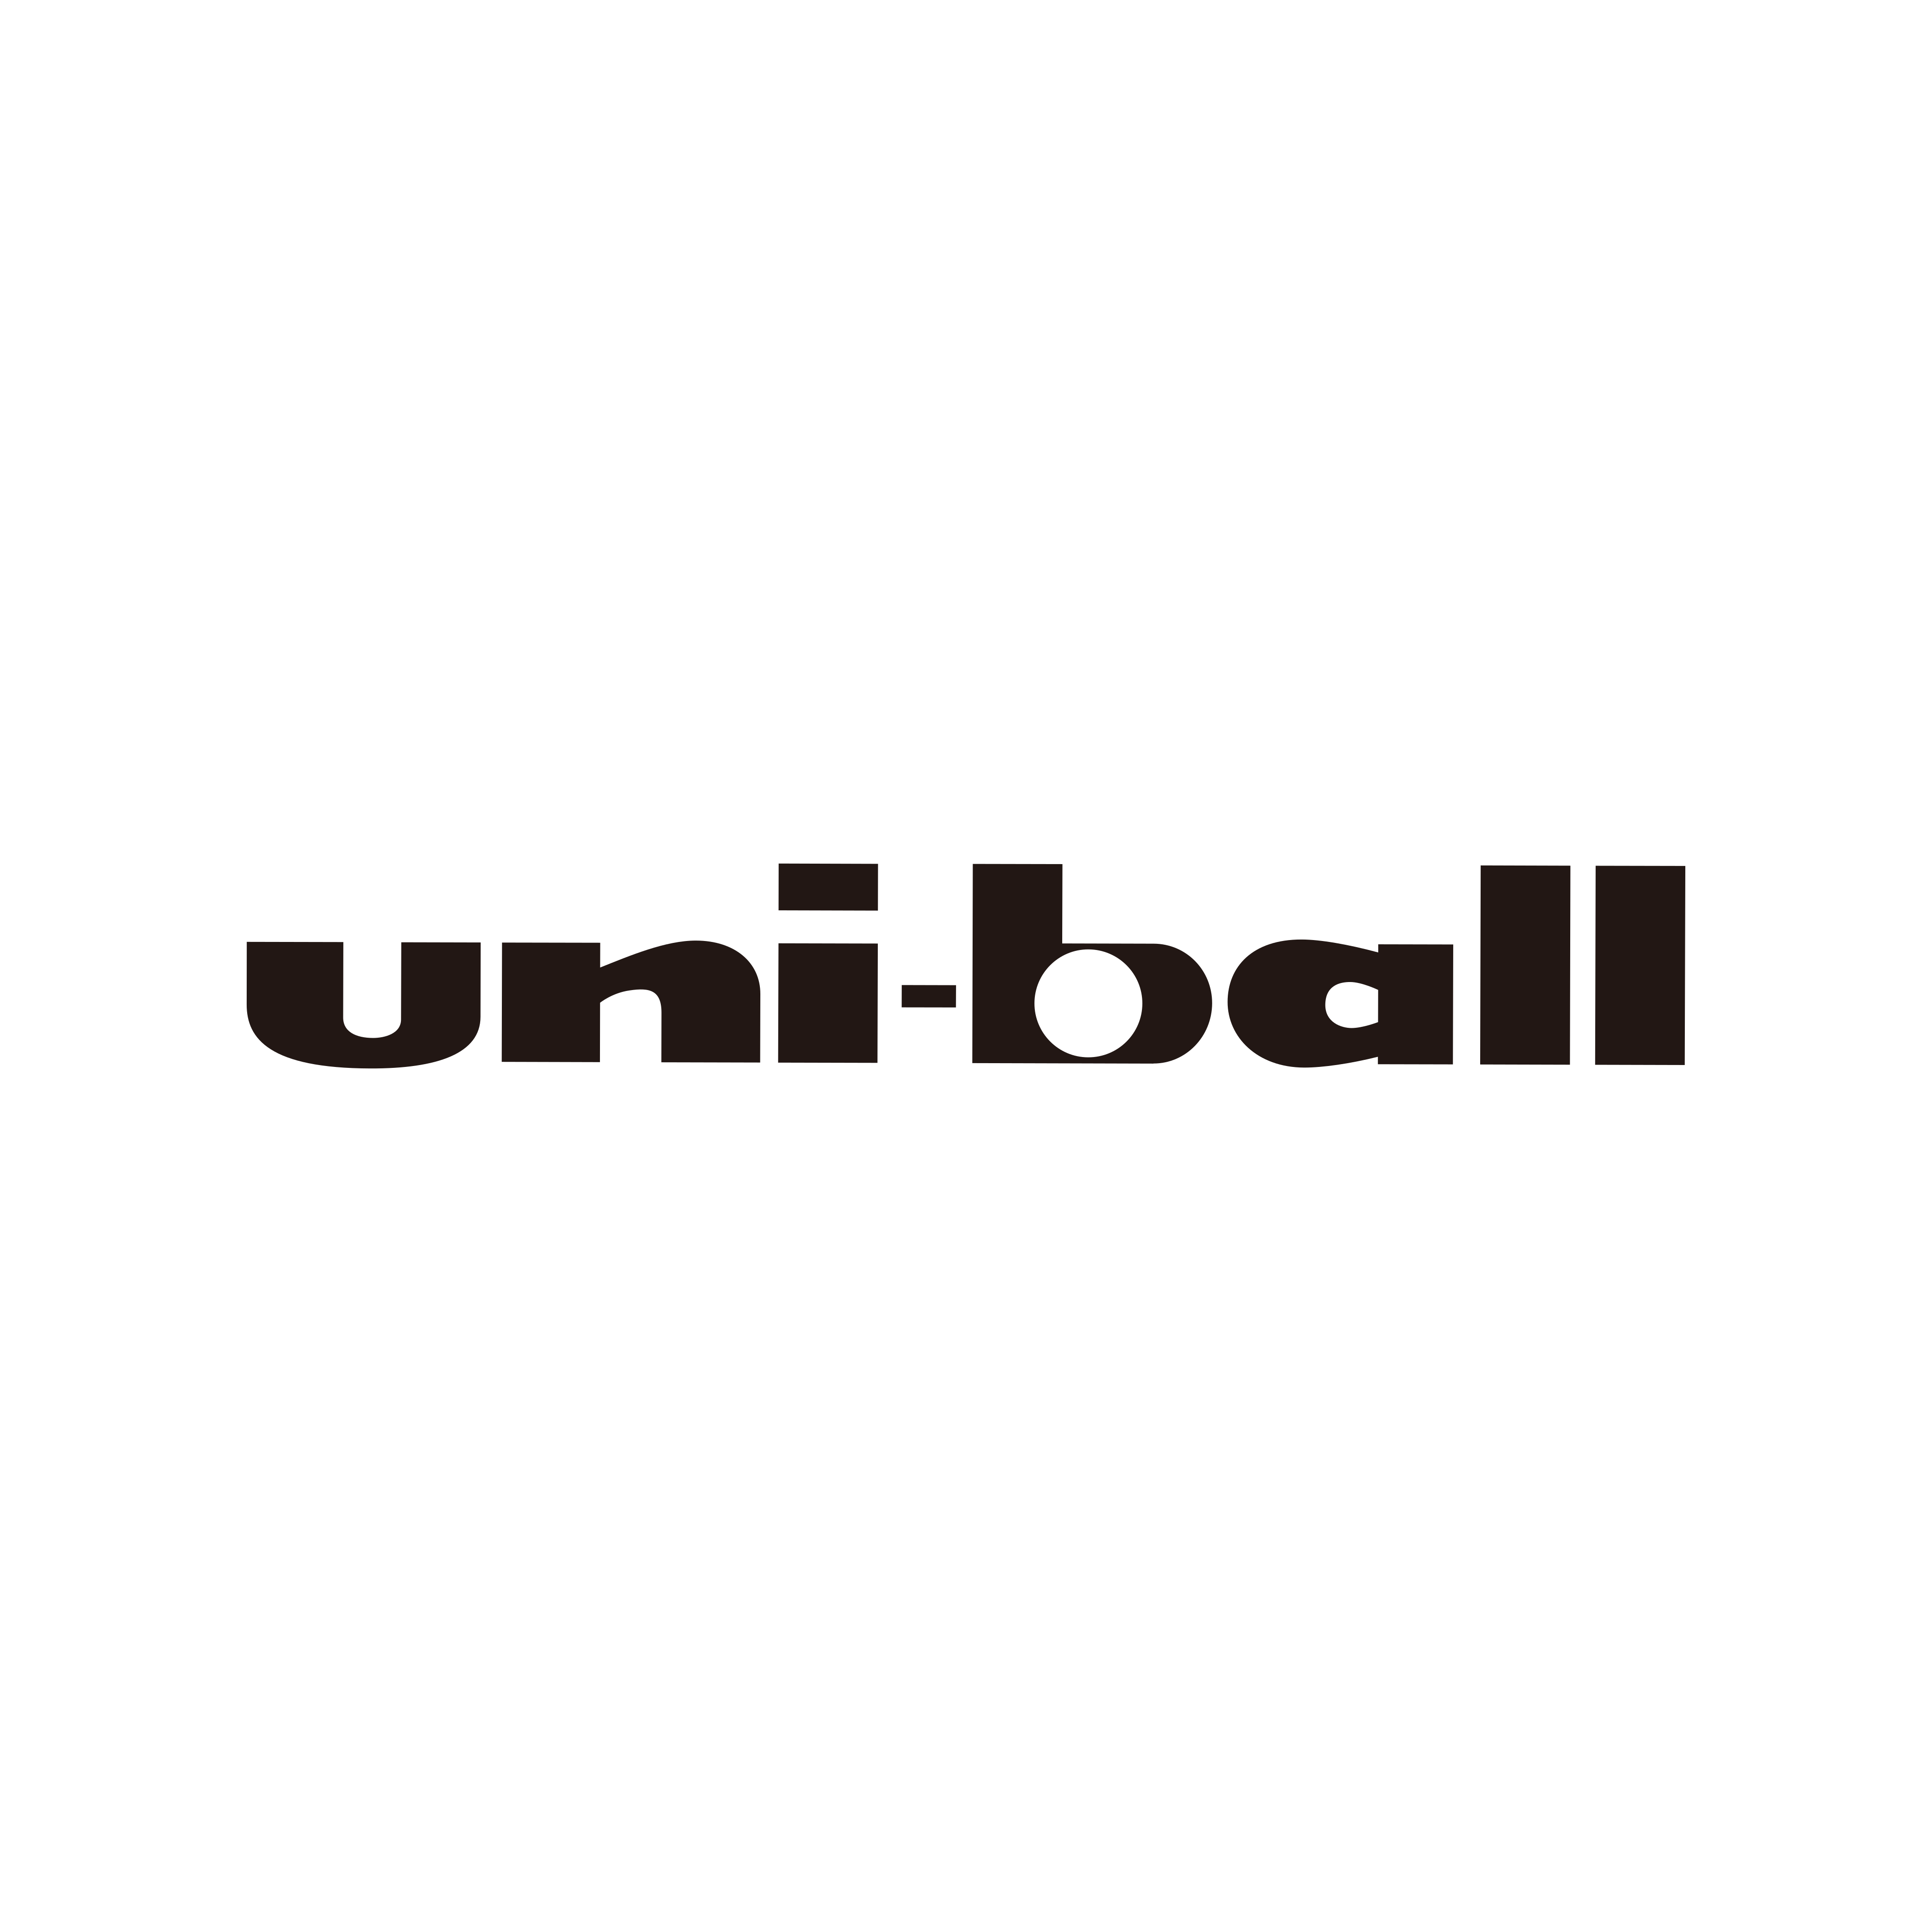 uni-ball Logo PNG.